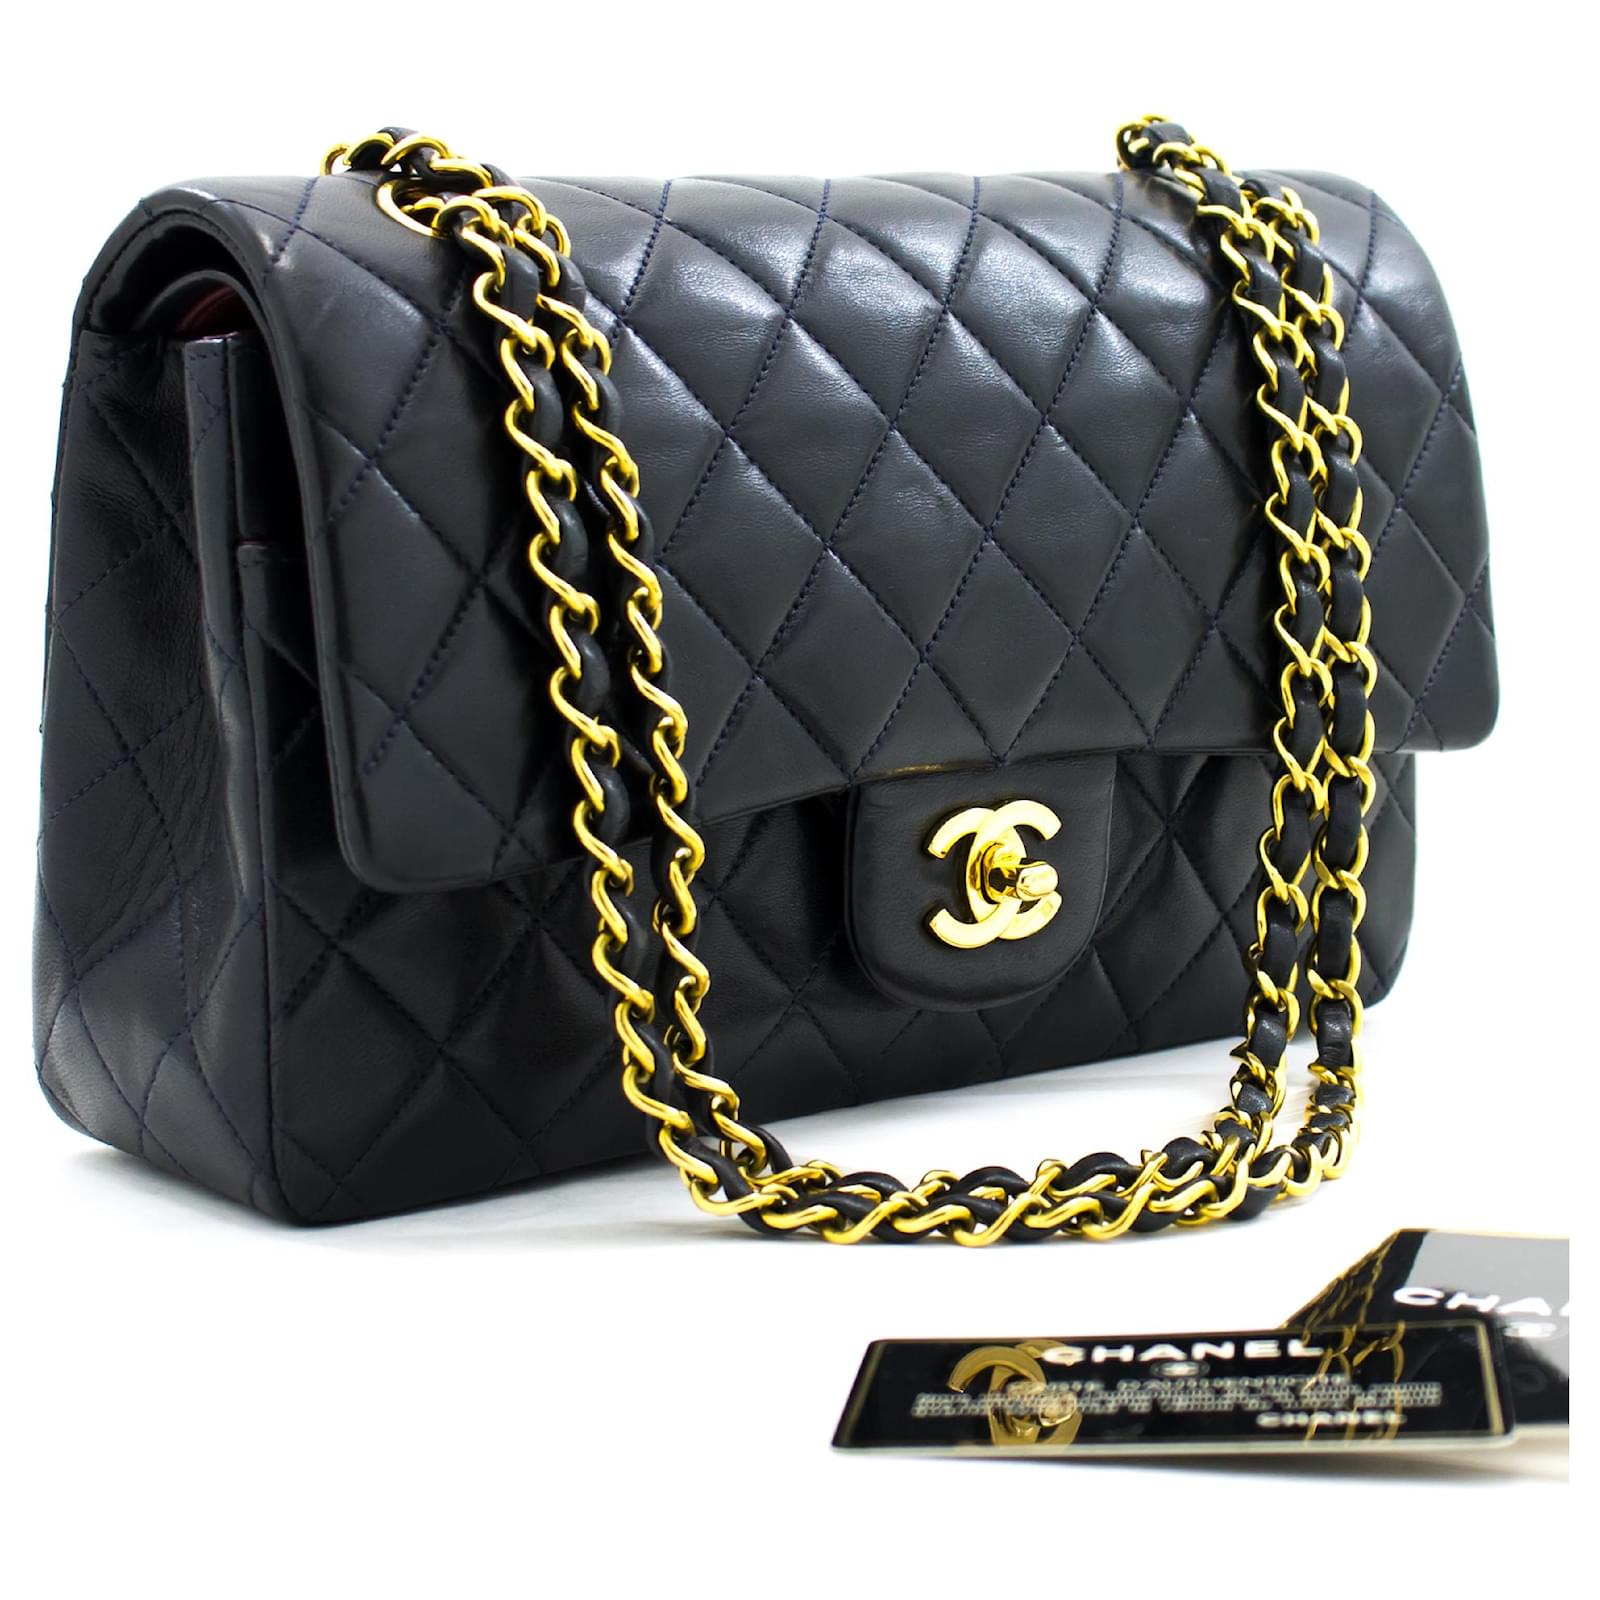 Chanel 2.55 lined Flap Medium Chain Shoulder Bag Navy Lambskin